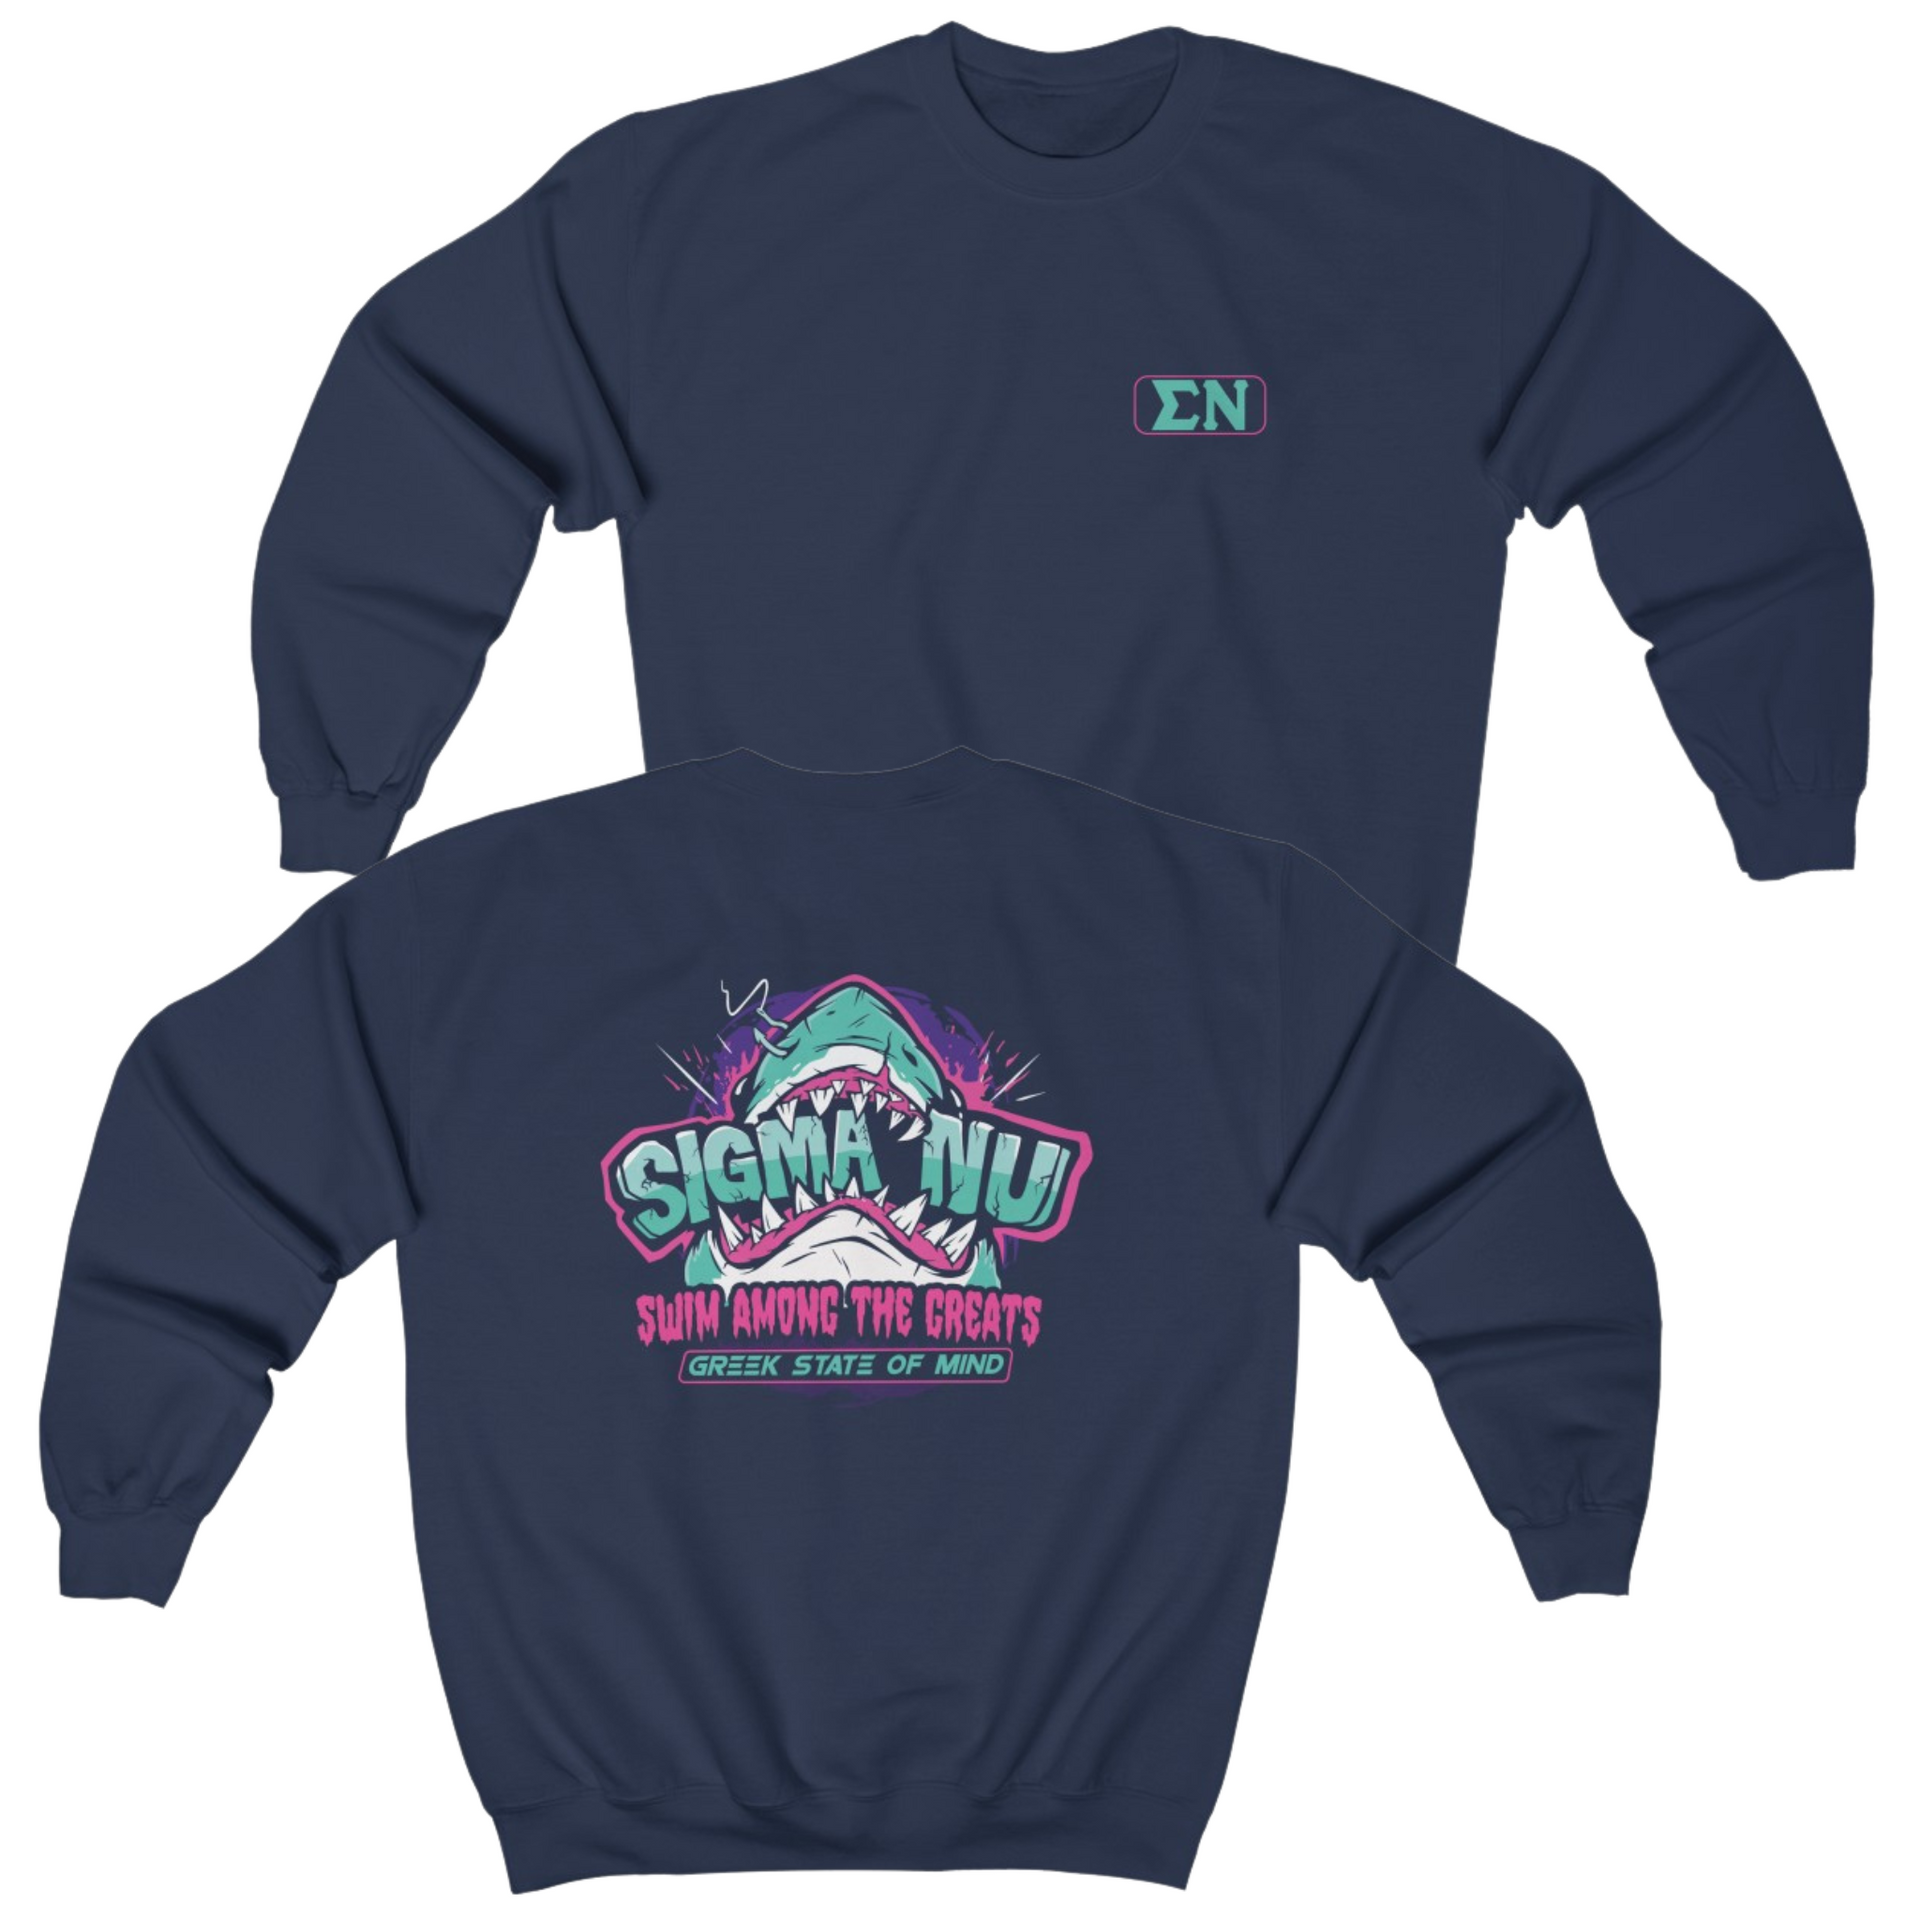 Navy Sigma Nu Graphic Crewneck Sweatshirt | The Deep End | Sigma Nu Clothing, Apparel and Merchandise